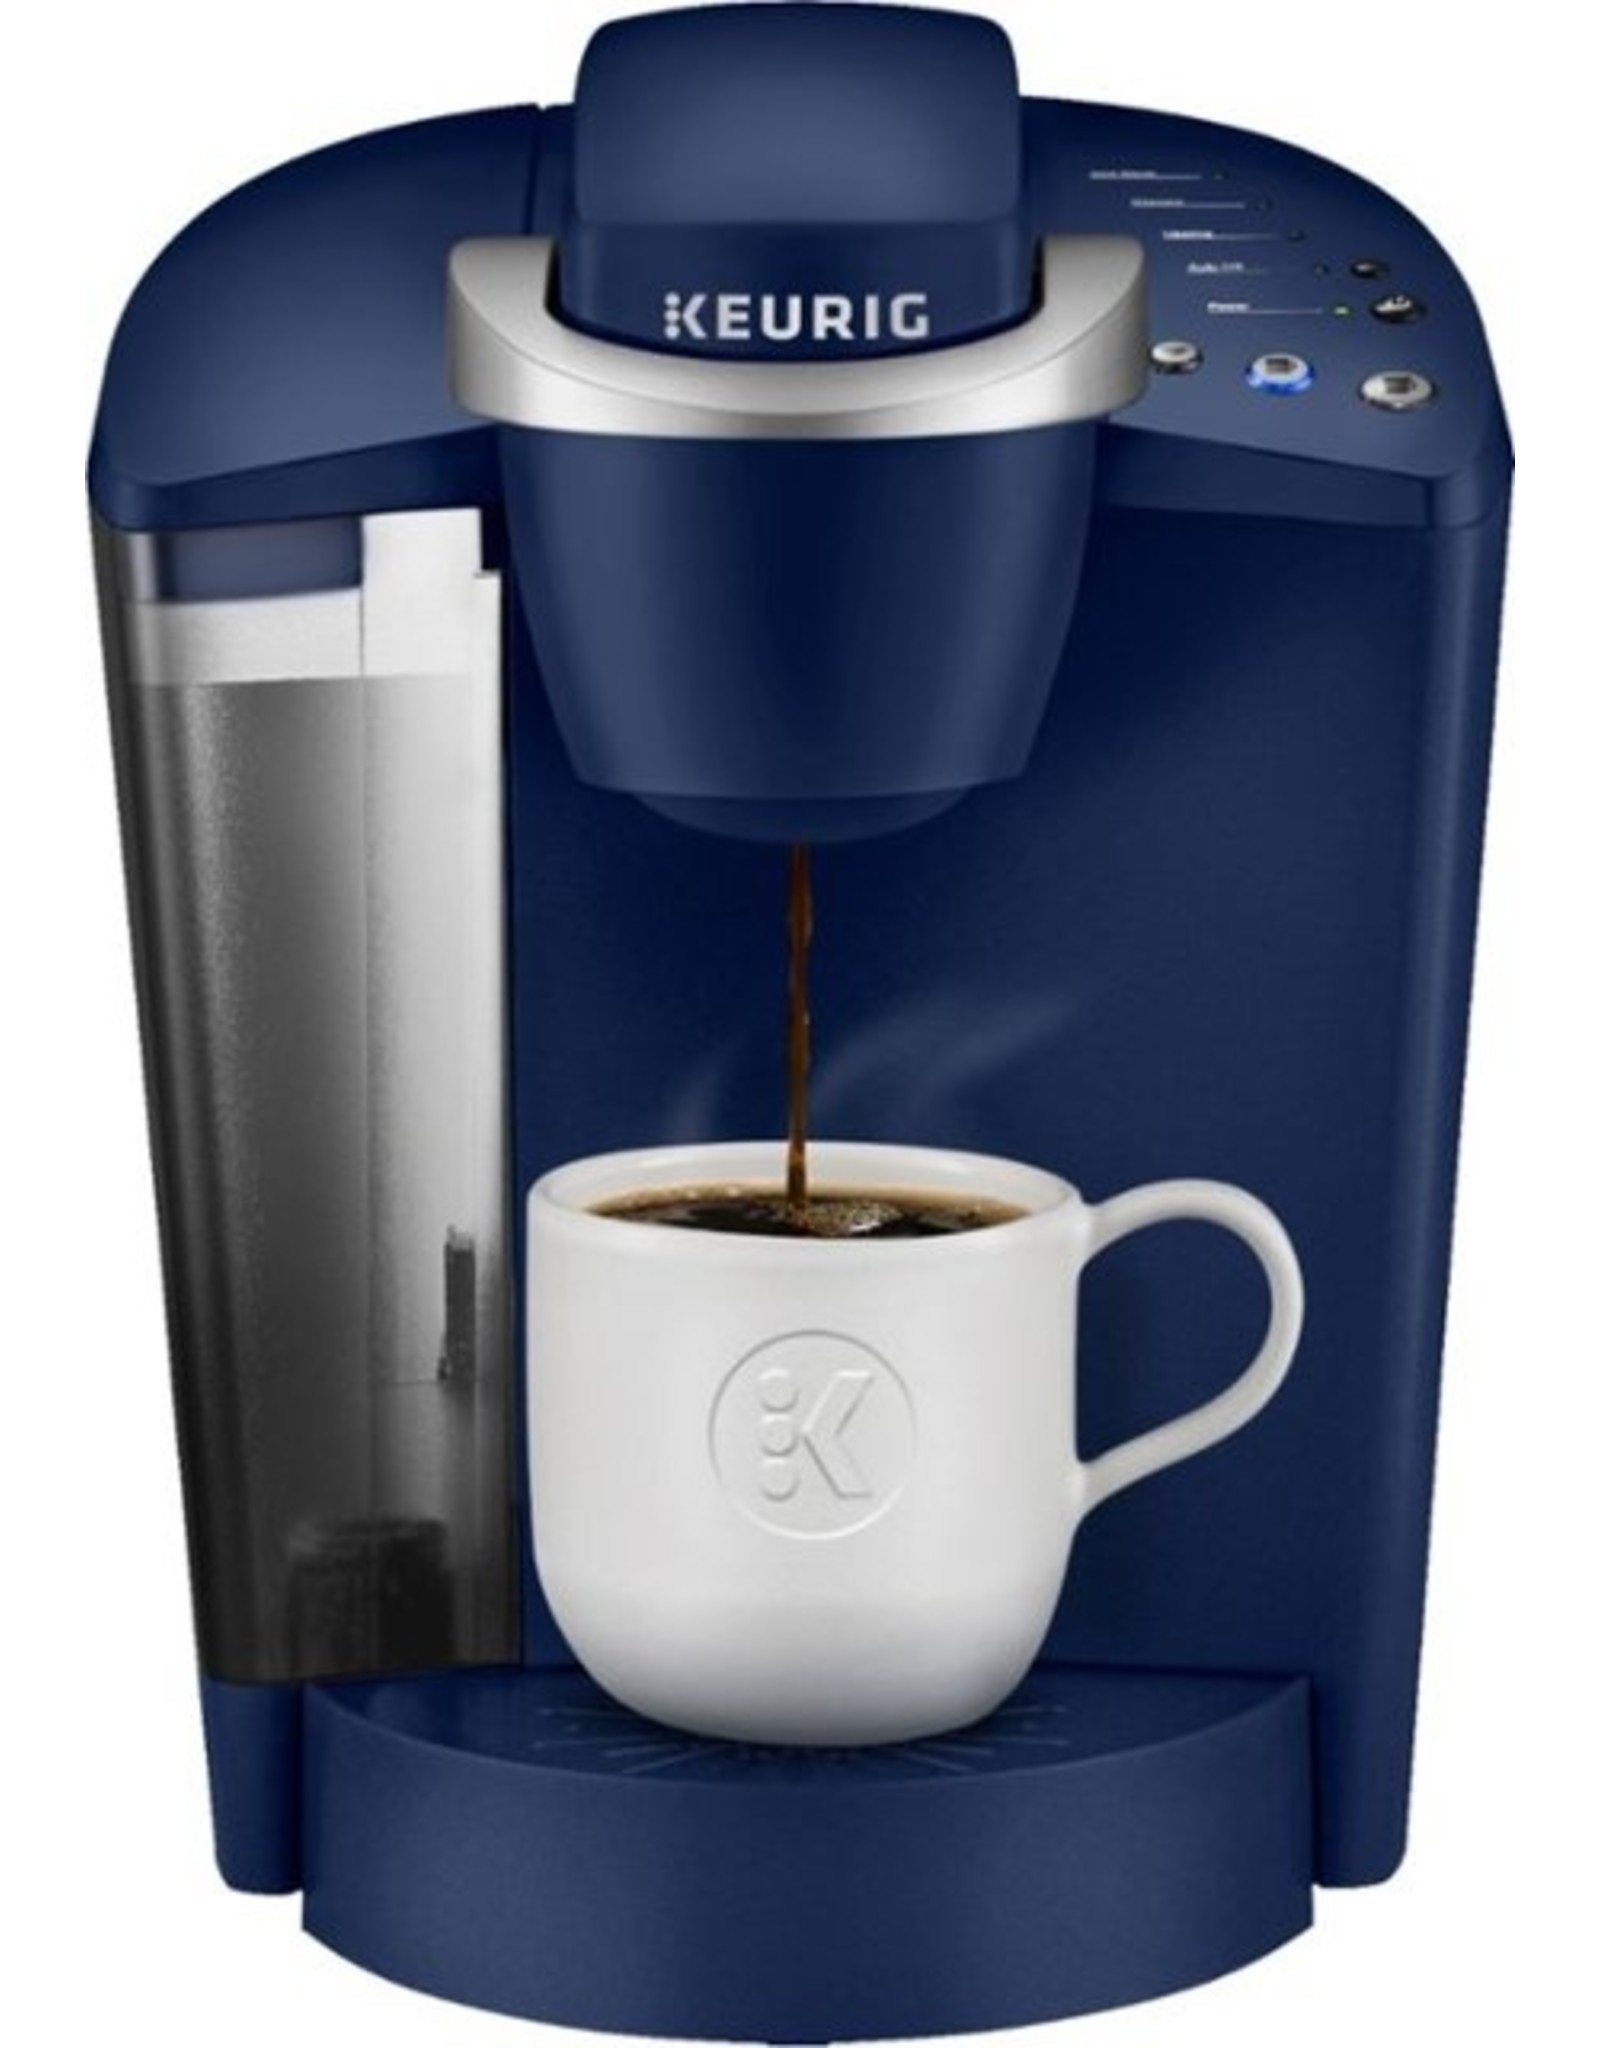 Classic K50 Black Single Serve Coffee Maker with Automatic Shut-Off